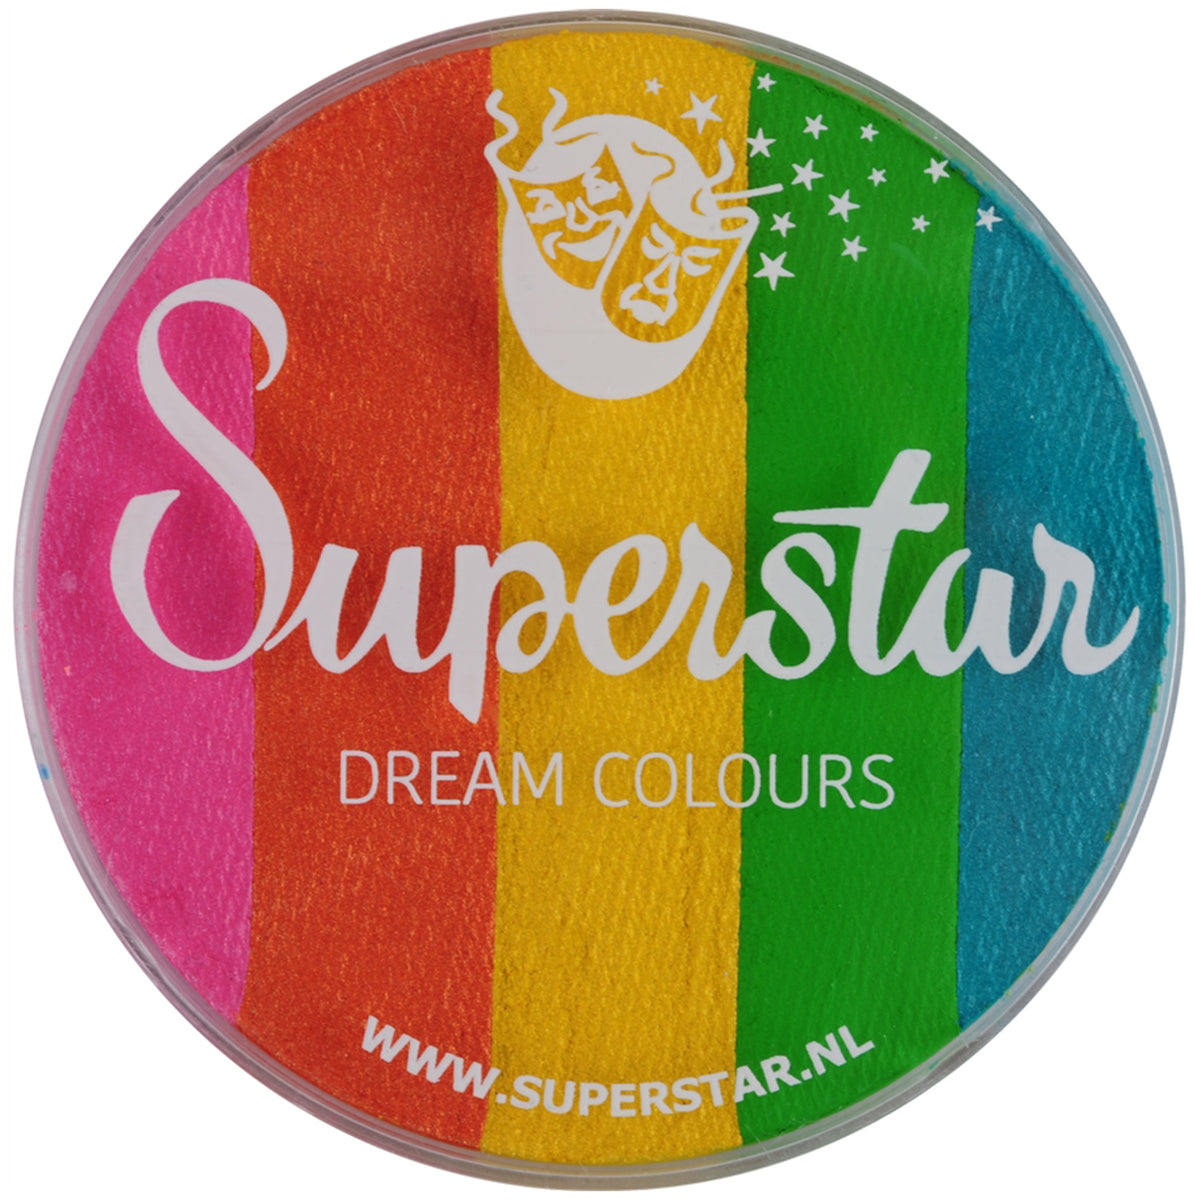 Superstar Dream Colours Rainbow Cake - Carnival #913 (45 gm/ 1.59 oz)